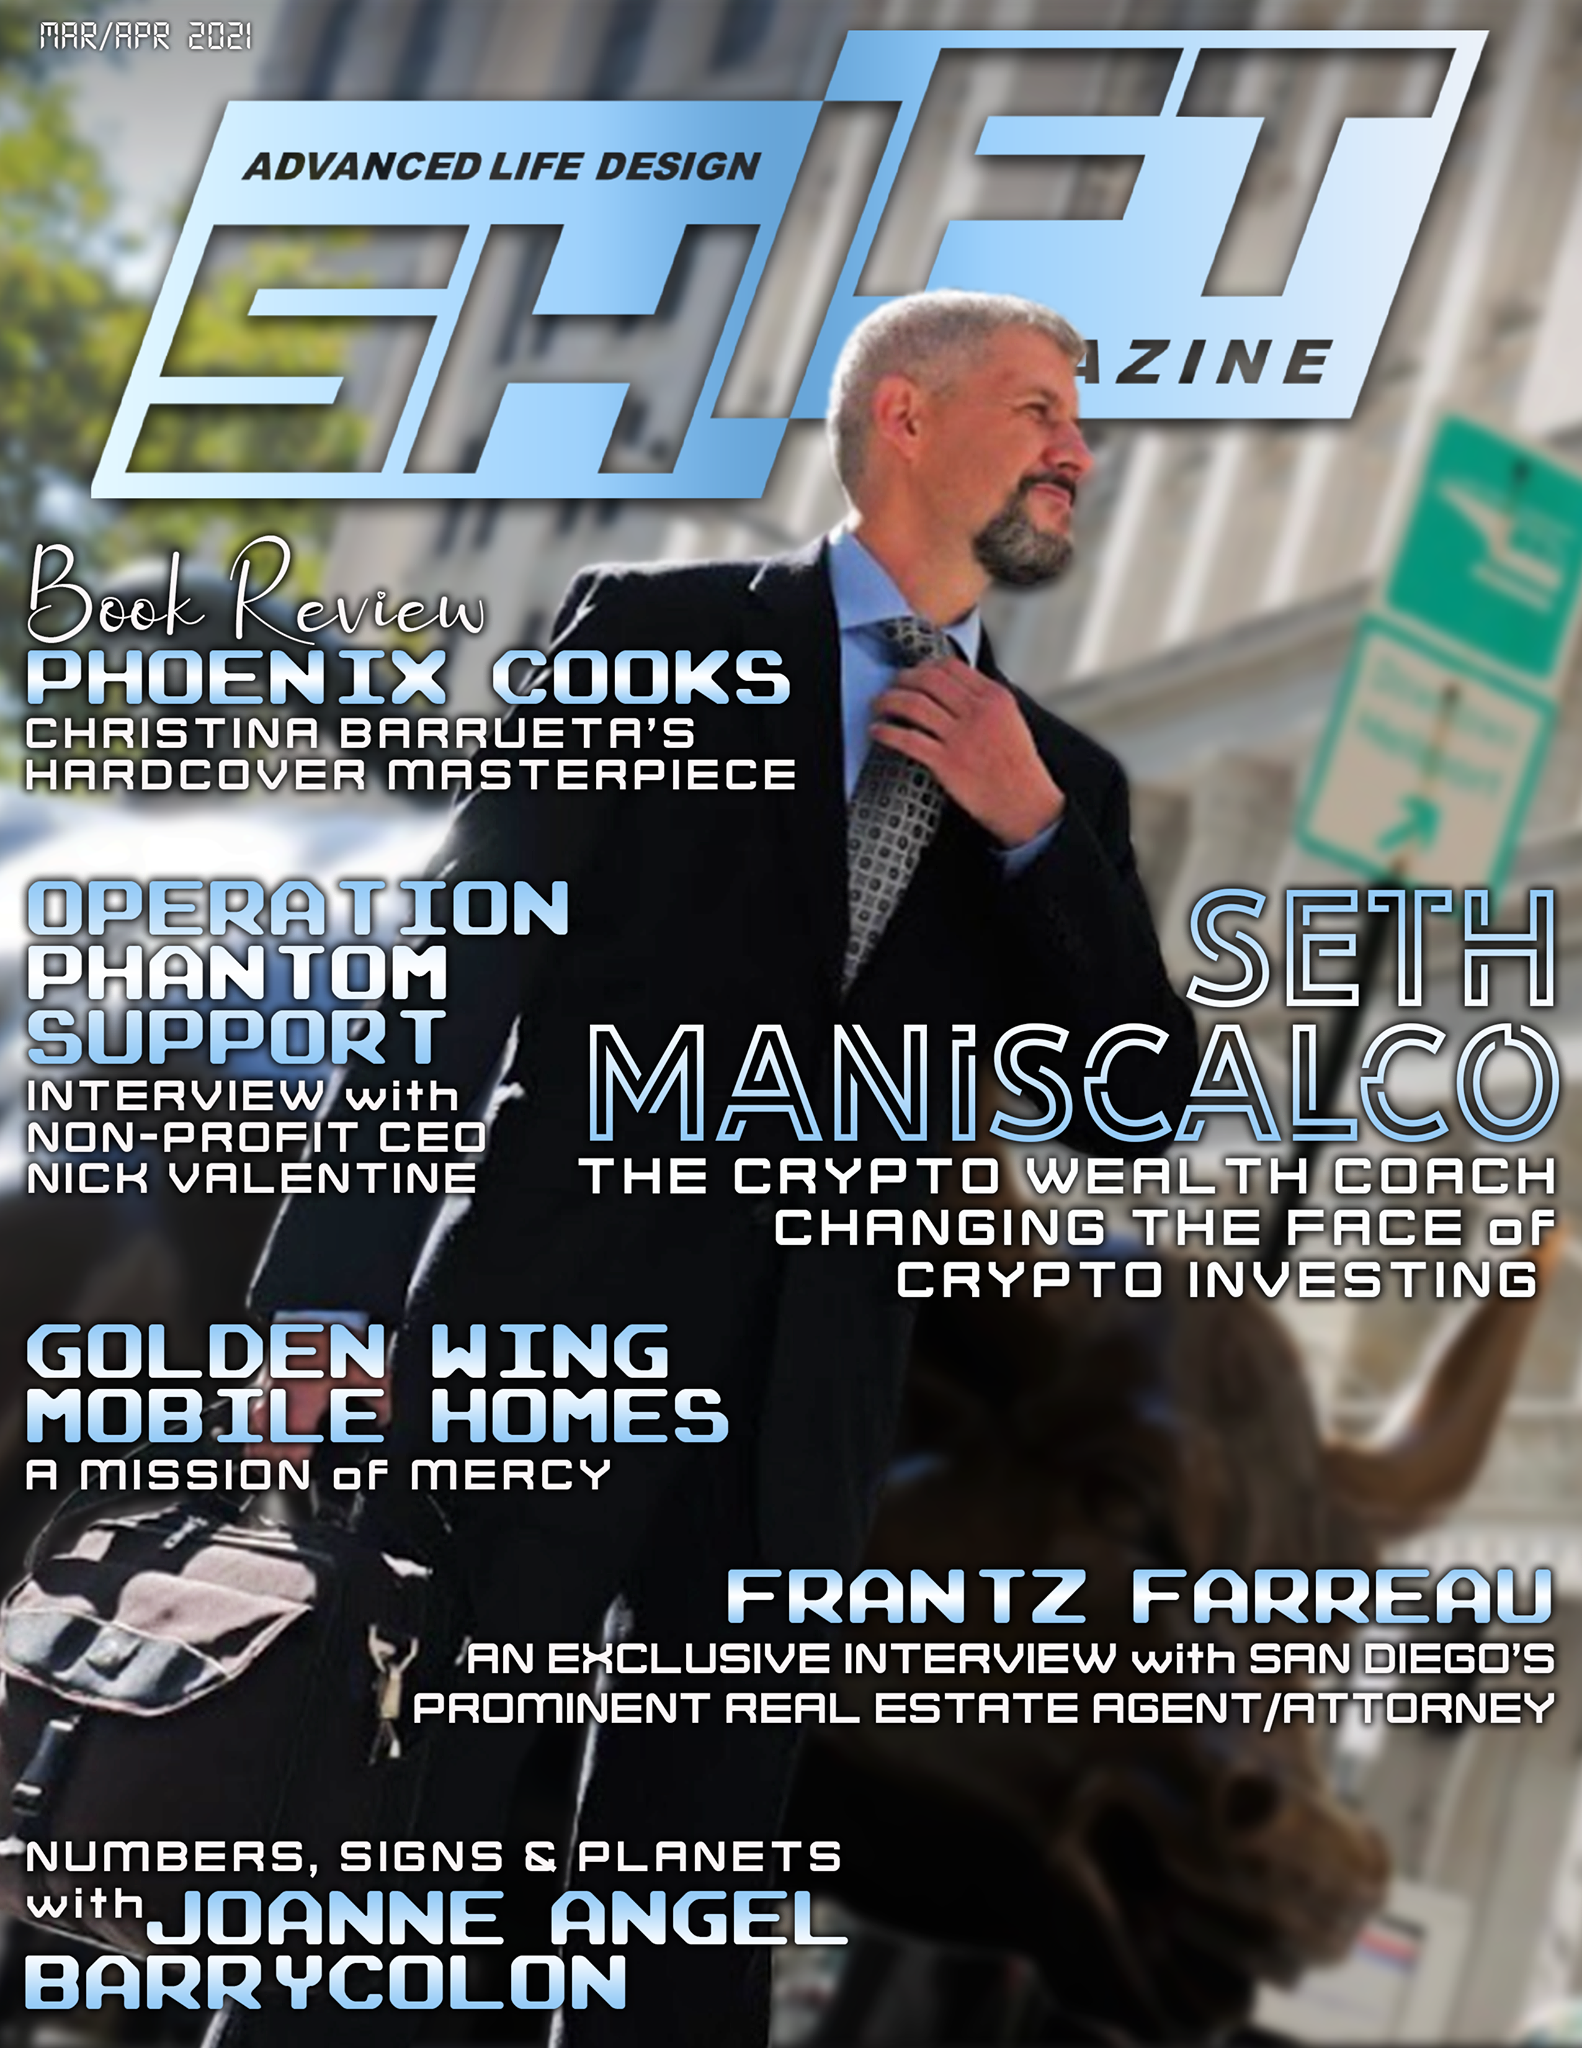 Former US Marine Turned Crypto Millionaire Seth Maniscalco Featured in SHIFT Advanced Life Design Magazine